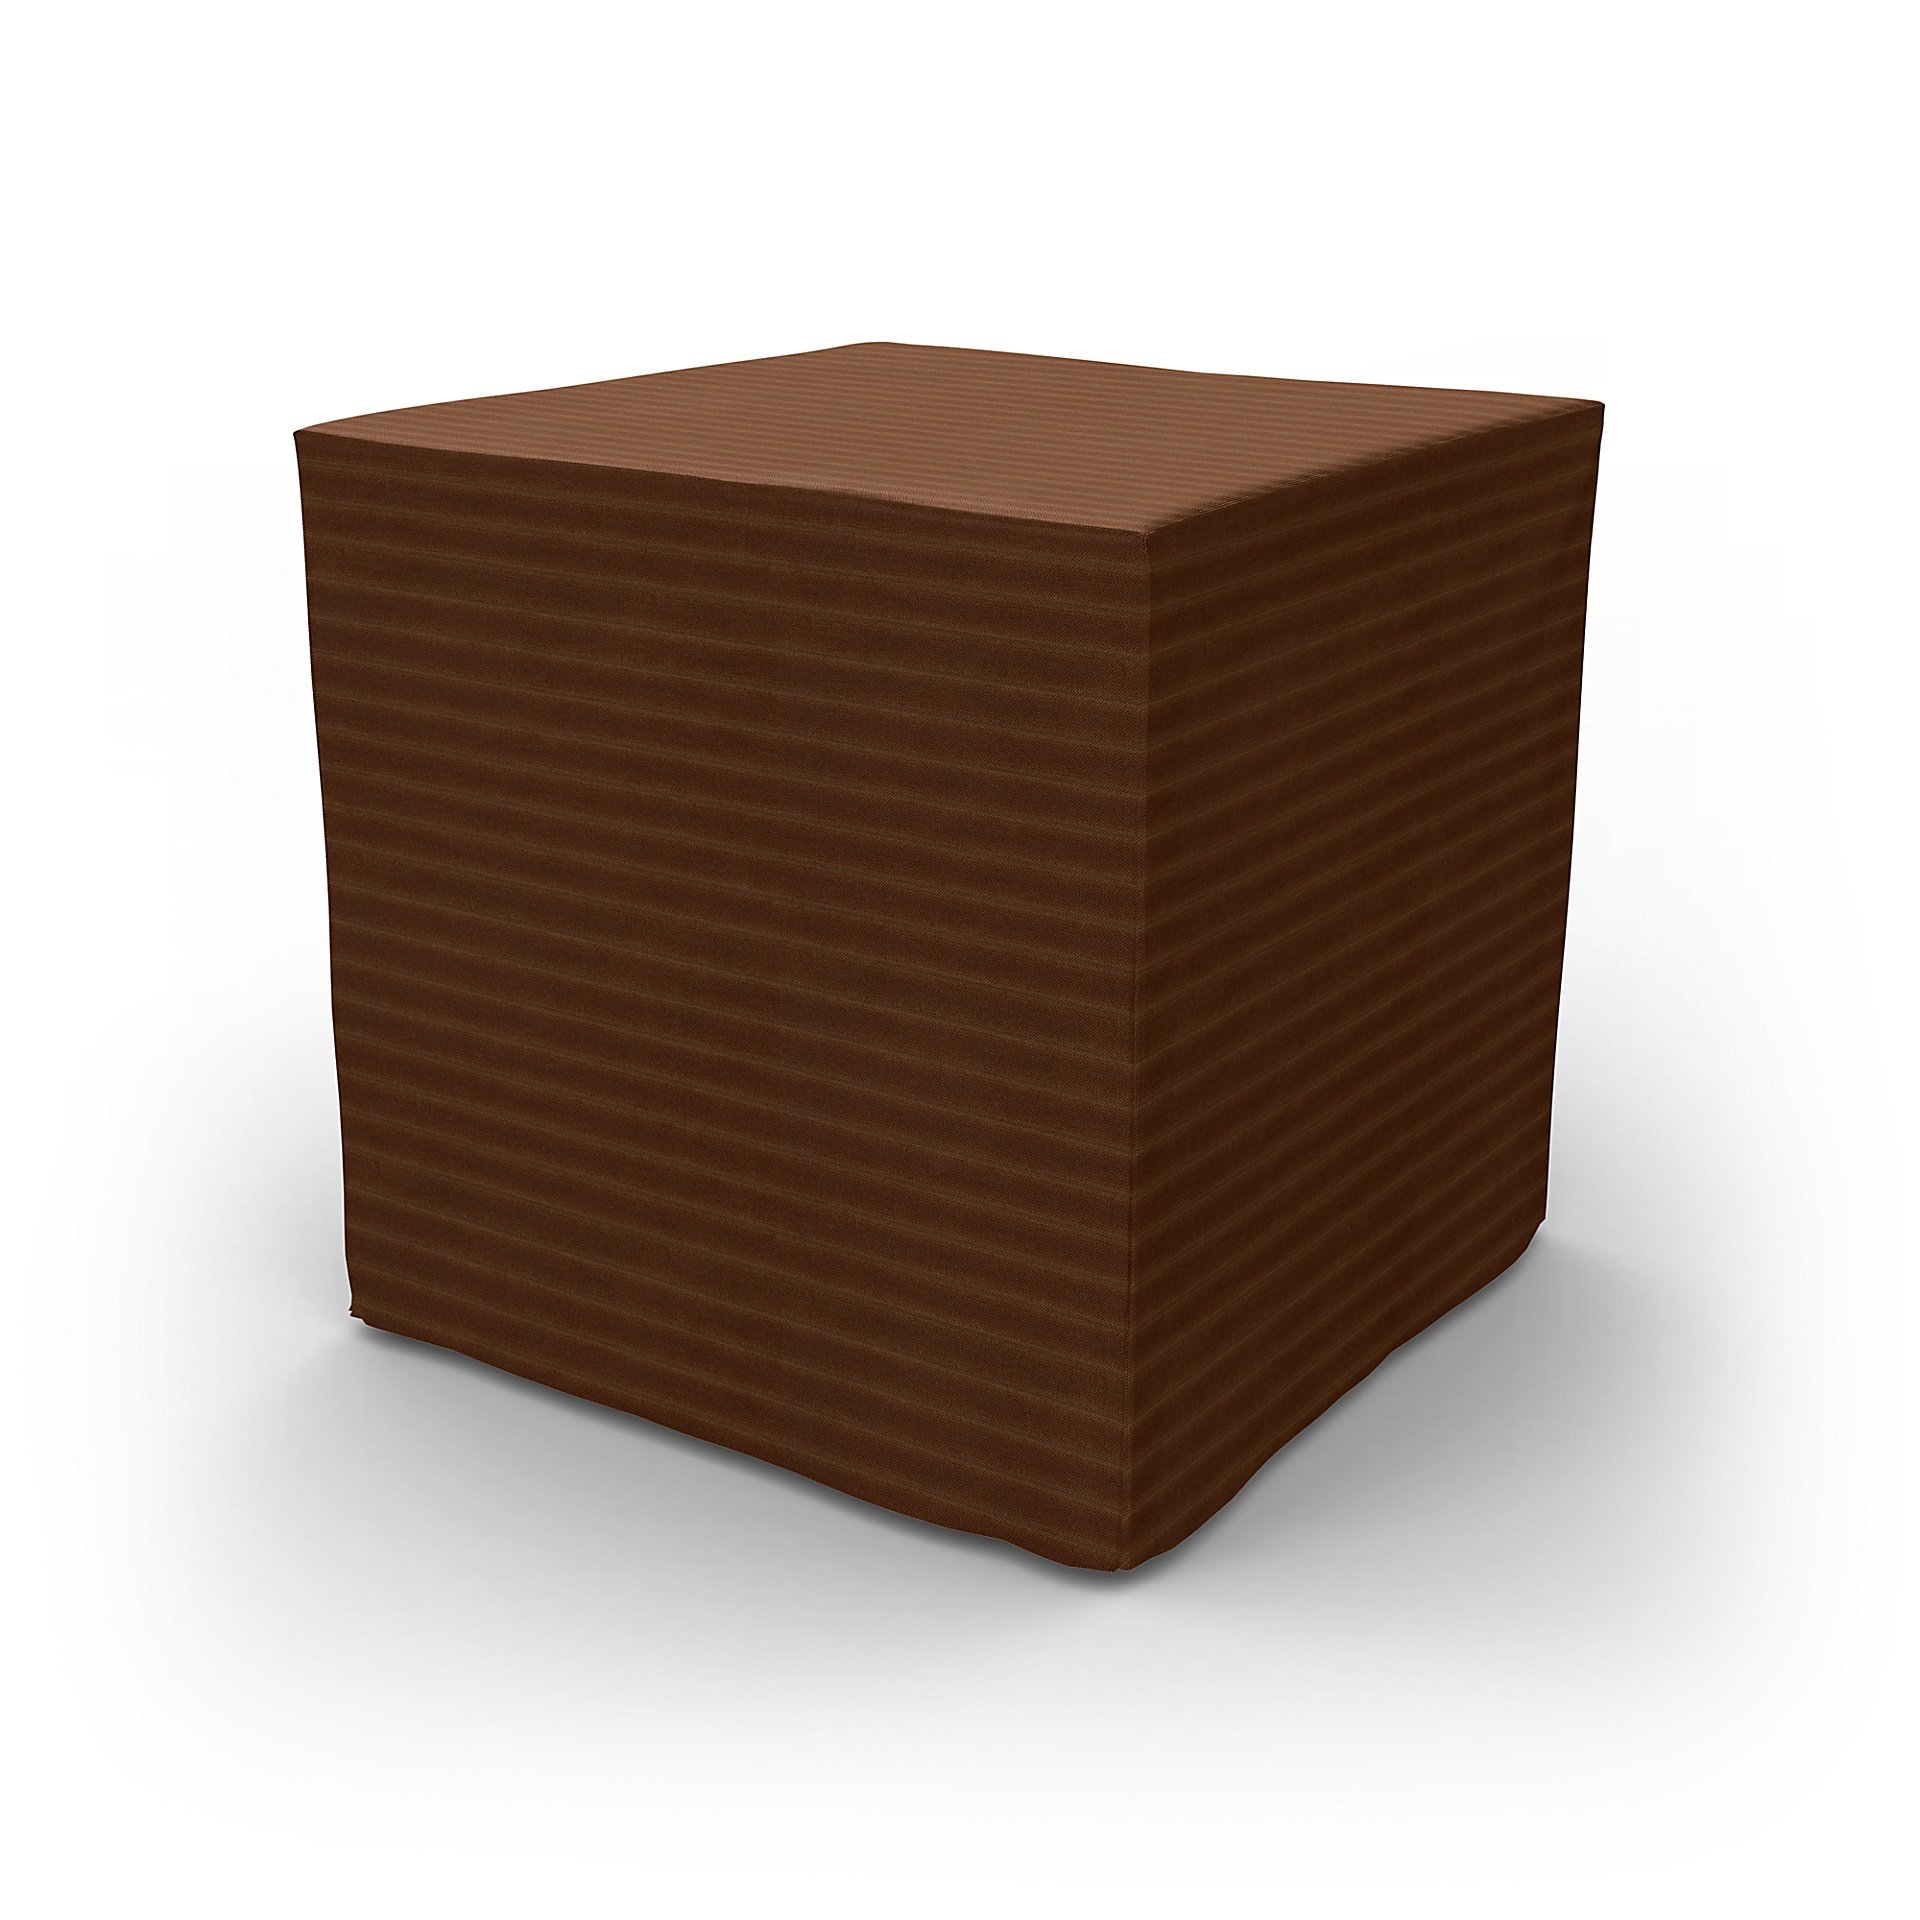 IKEA - Pallbo Footstool Cover, Chocolate Brown, Corduroy - Bemz